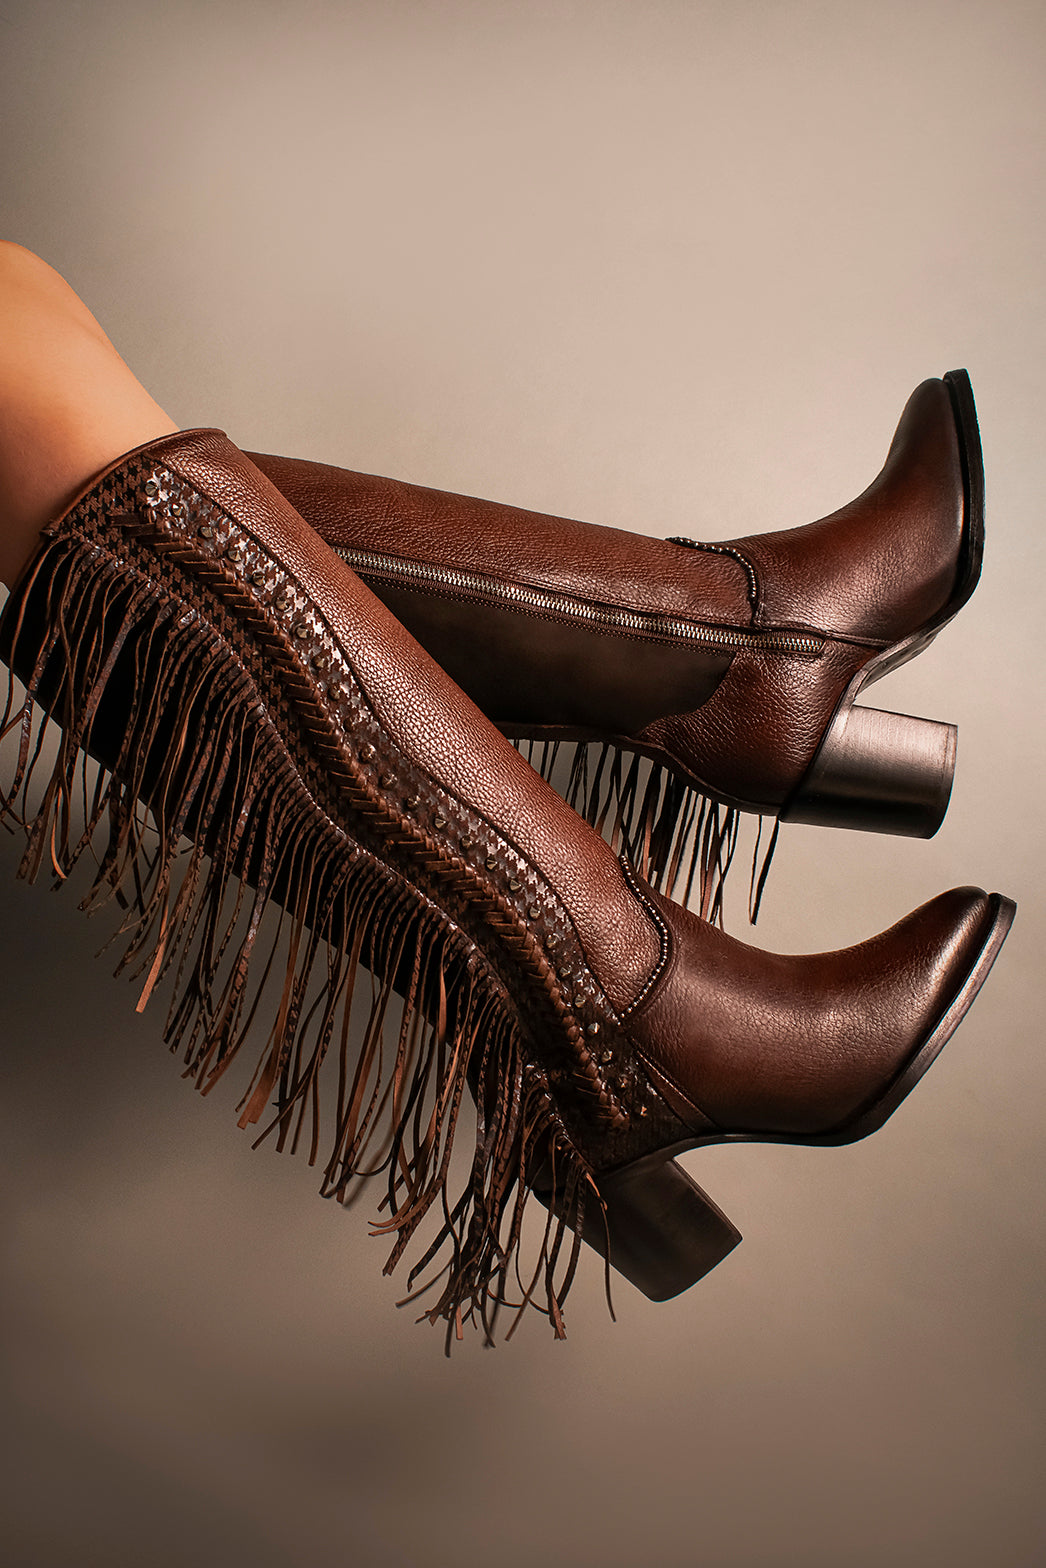 Men's brown dress ankle leather boots - 4J02TI - Cuadra Shop